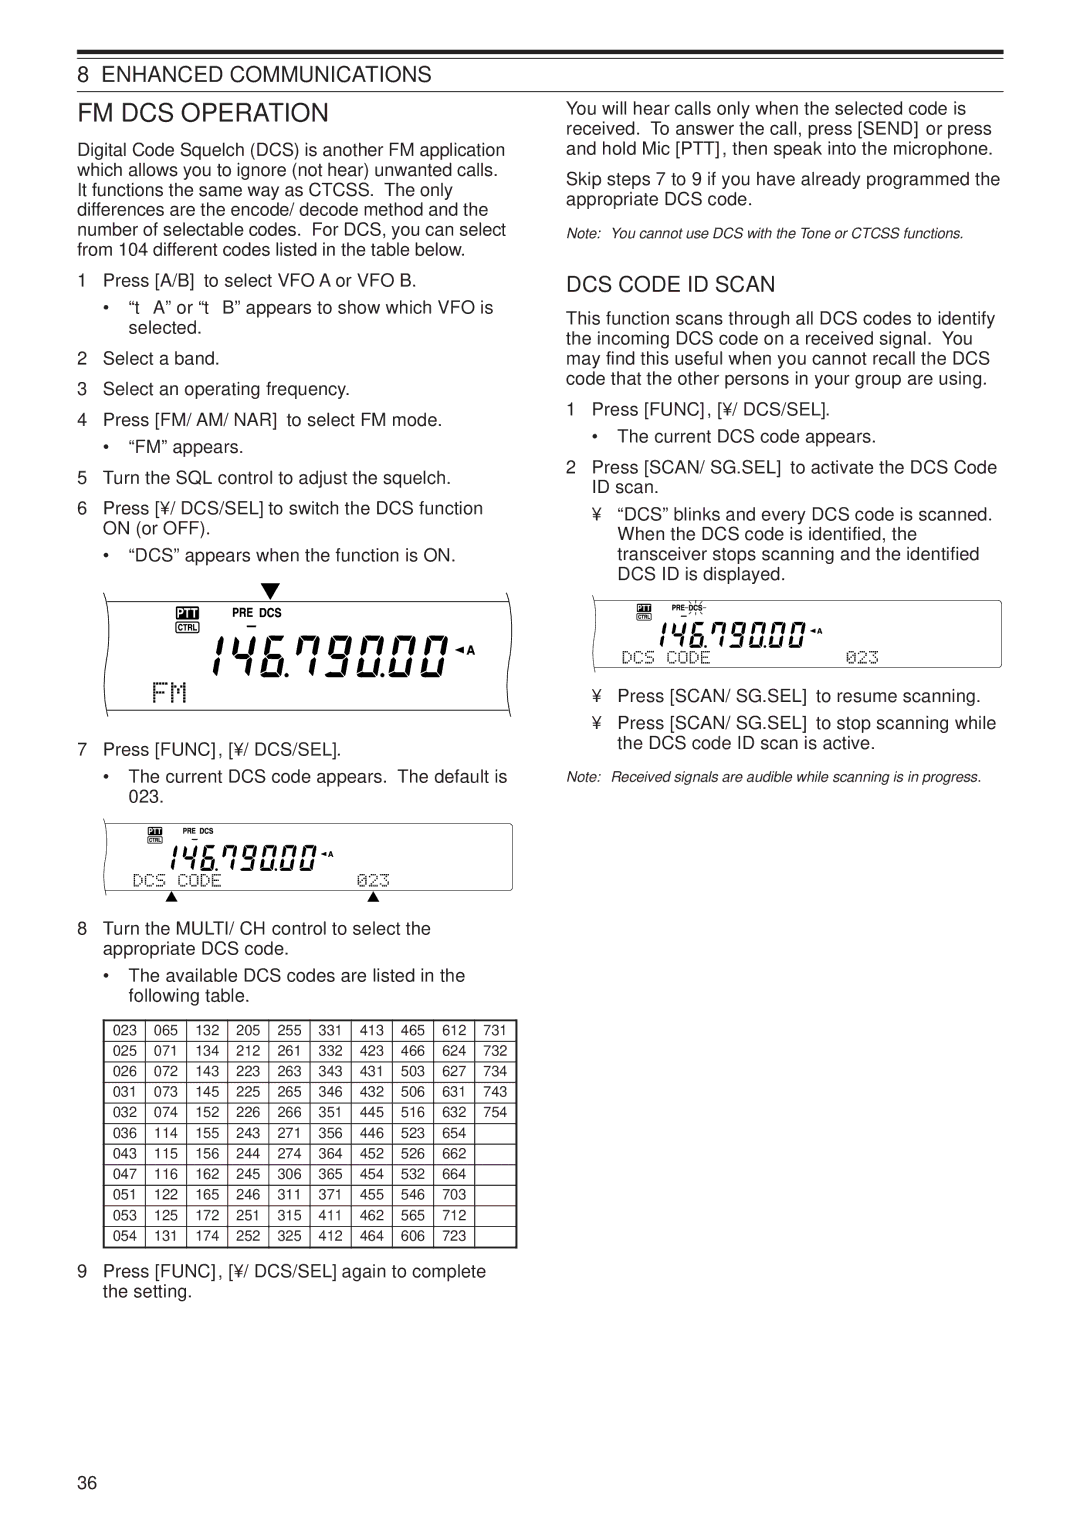 Kenwood TS-B2000, TS-2000X instruction manual FM DCS Operation, DCS Code ID Scan, Press FUNC, / DCS/SEL 